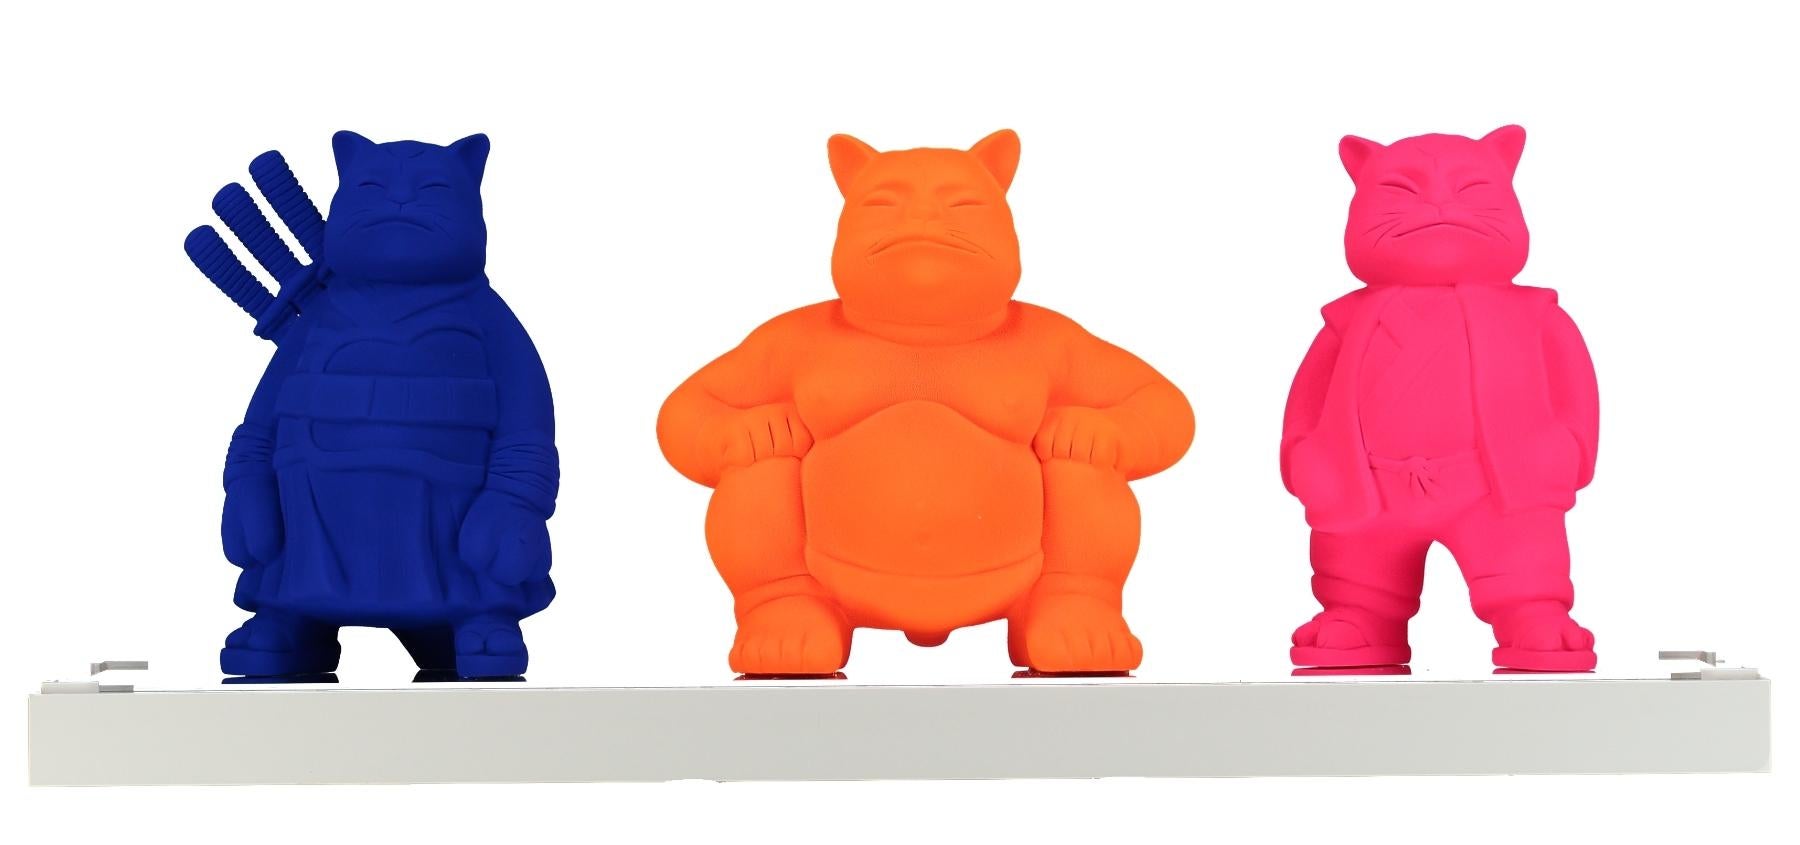 Trilogy Samuraicat Blu, Sumocat Orange, Urbancat Pink : Feline Odyssey - Sculpture by HIRO ANDO